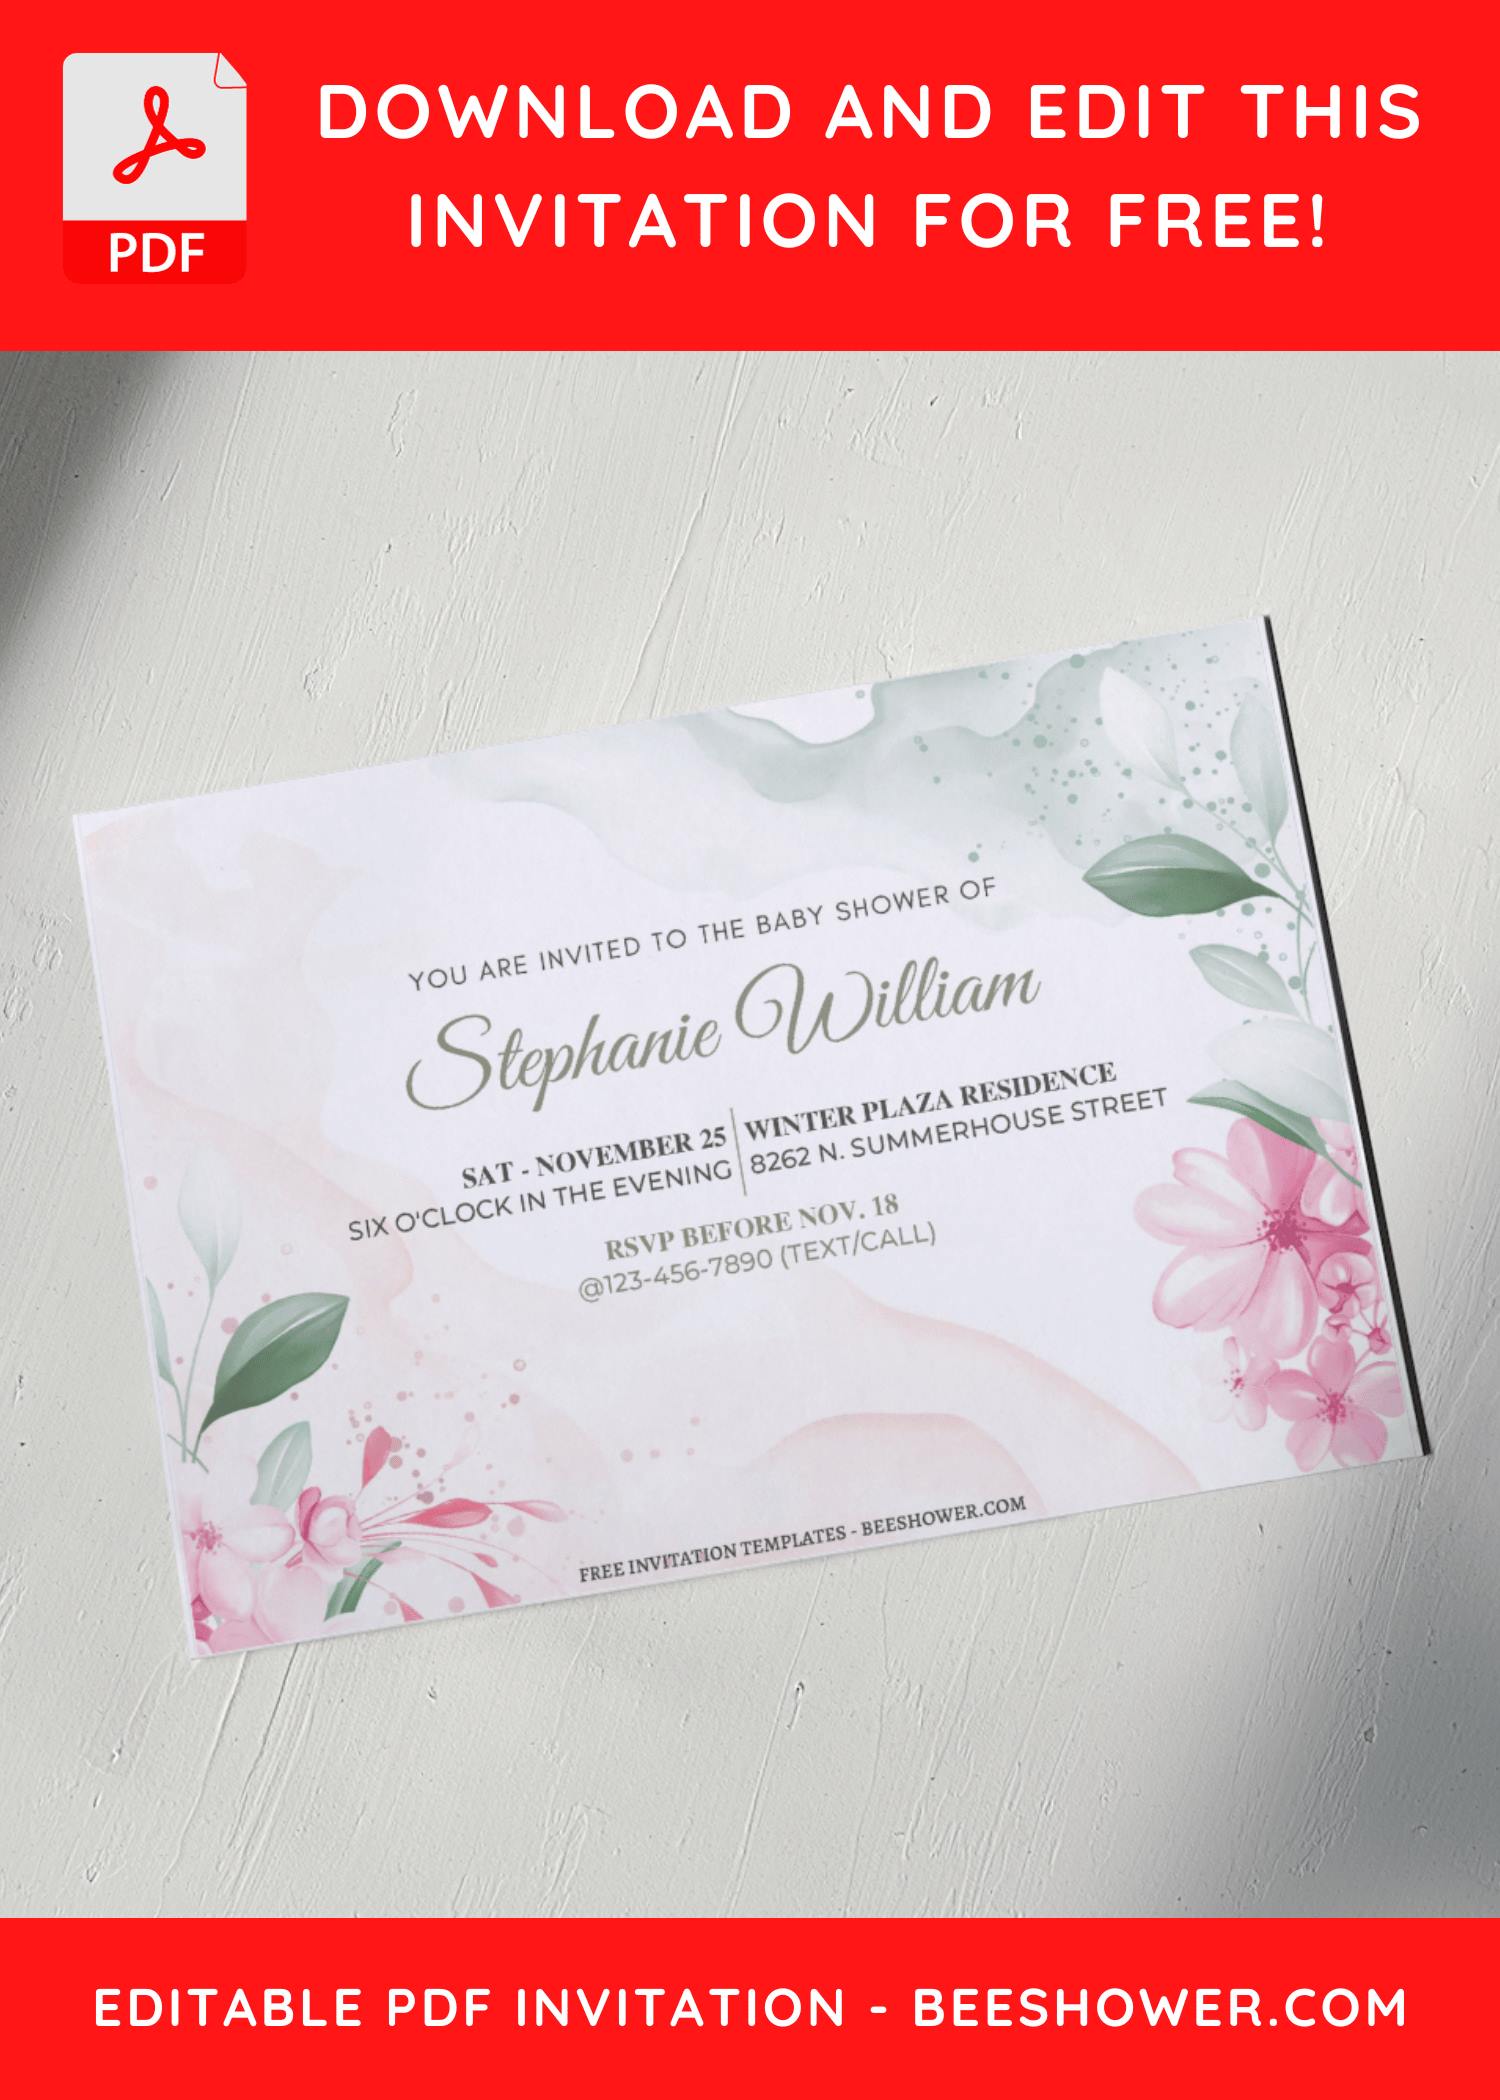 (Free Editable PDF) Magnificent Magnolia Baby Shower Invitation Templates B